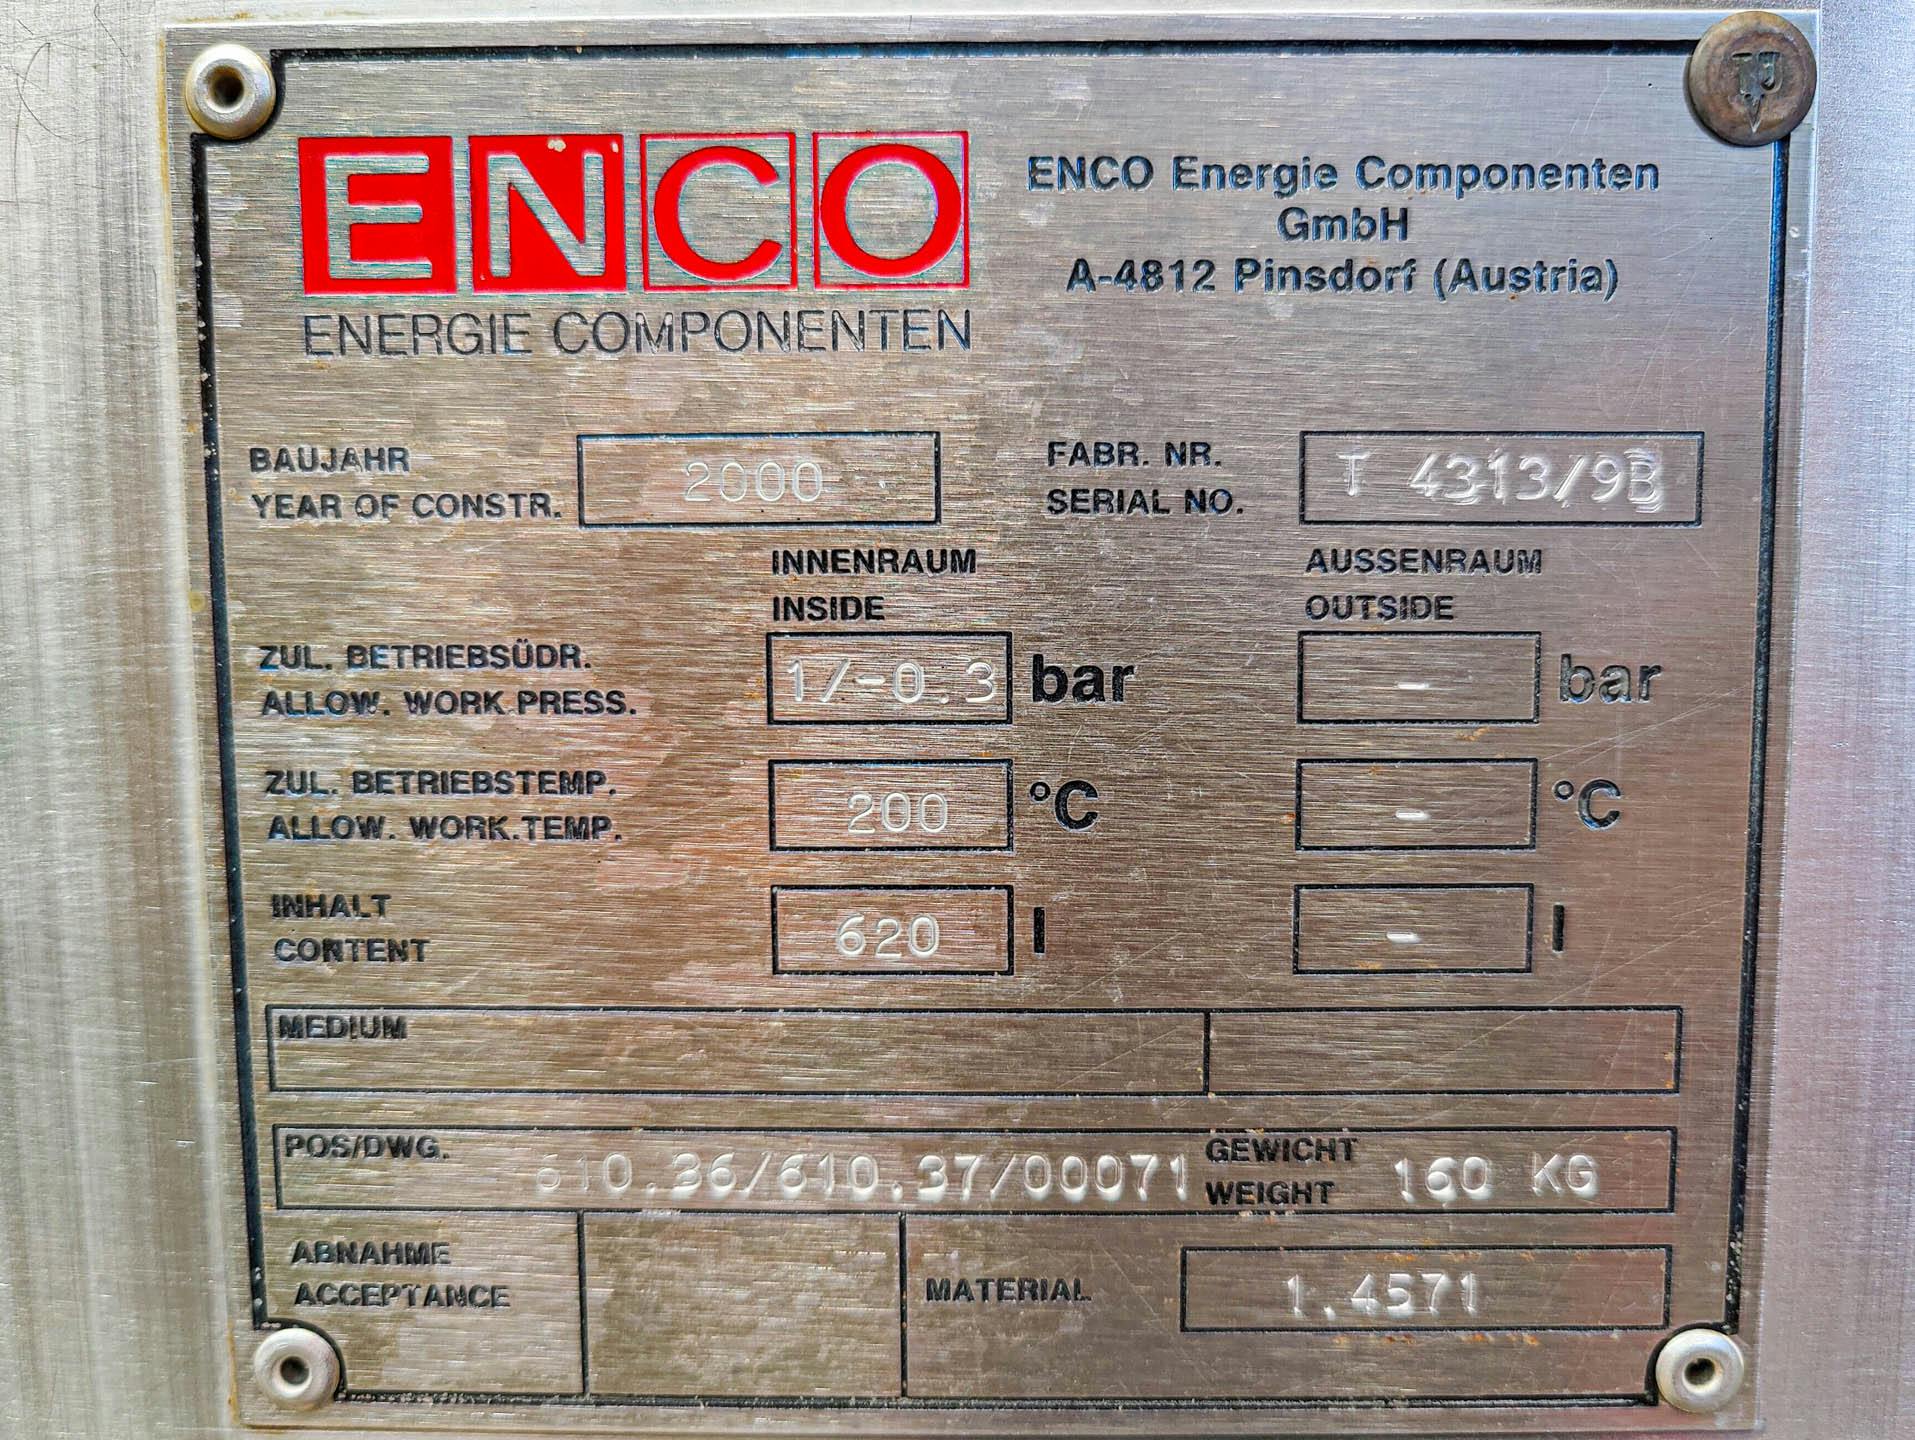 Enco 620 Ltr. - Cuve pressurisable - image 7